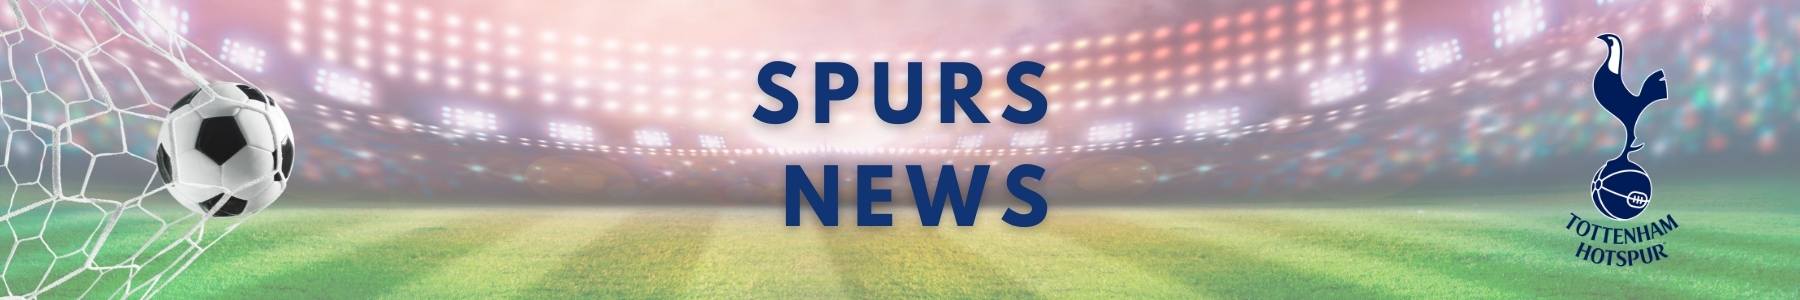 Tottenham Hotspur - Latest News